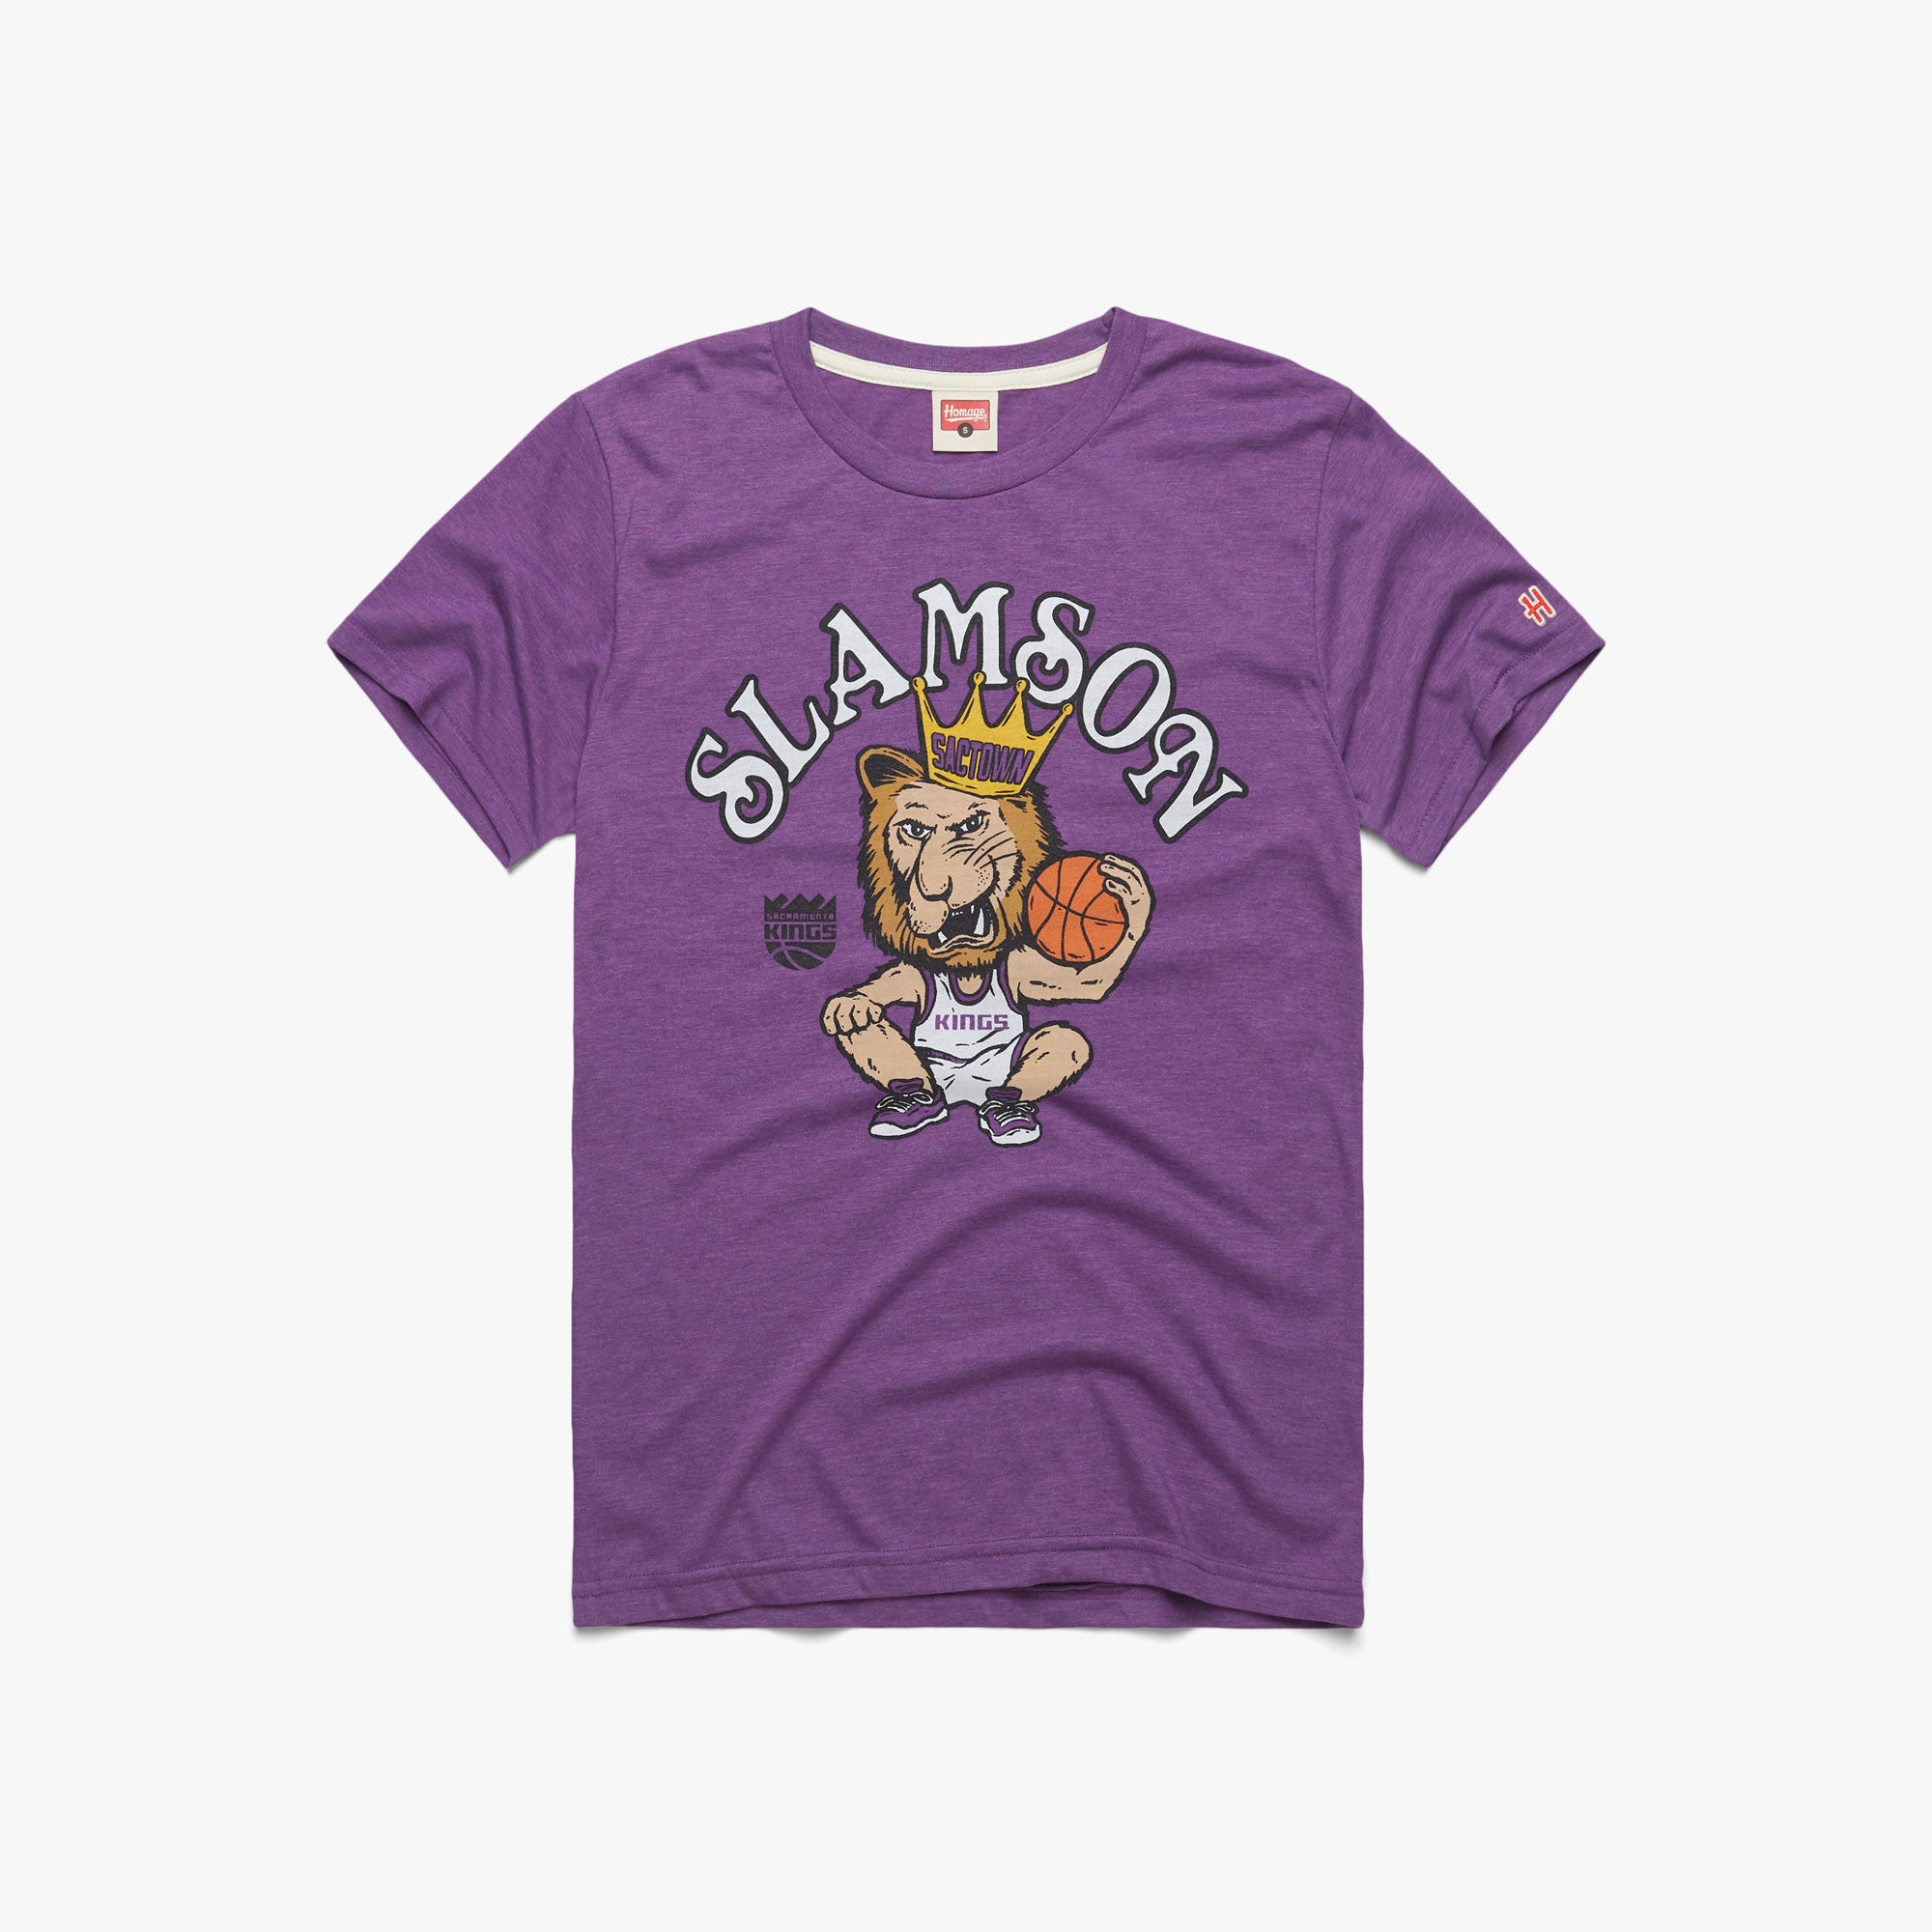 Shop Sacramento Kings Tshirt online